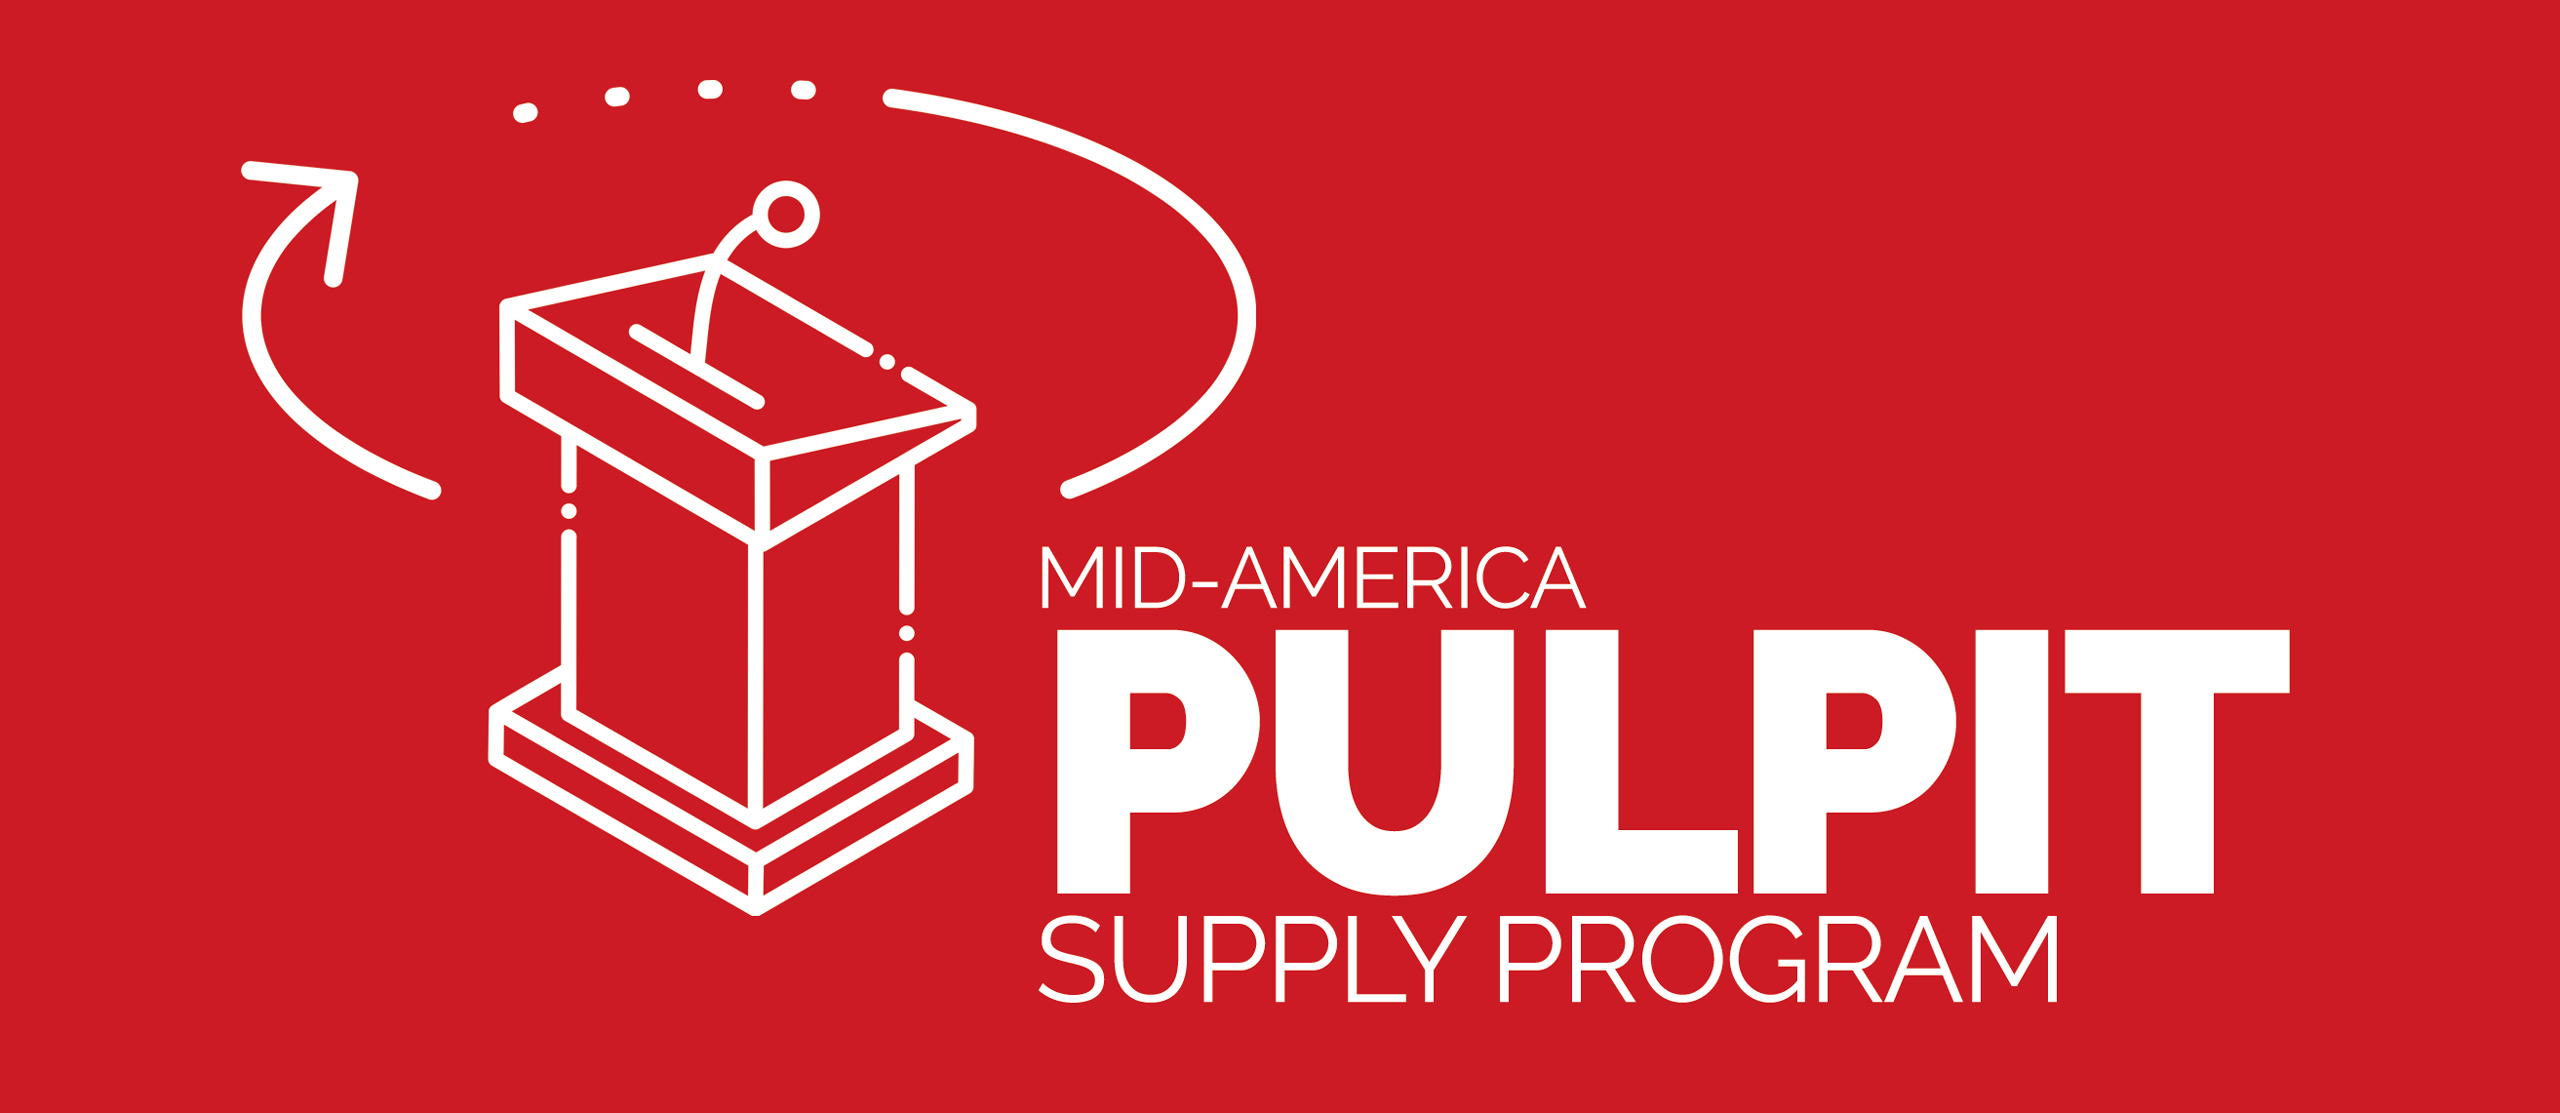 Pulpit Supply Program